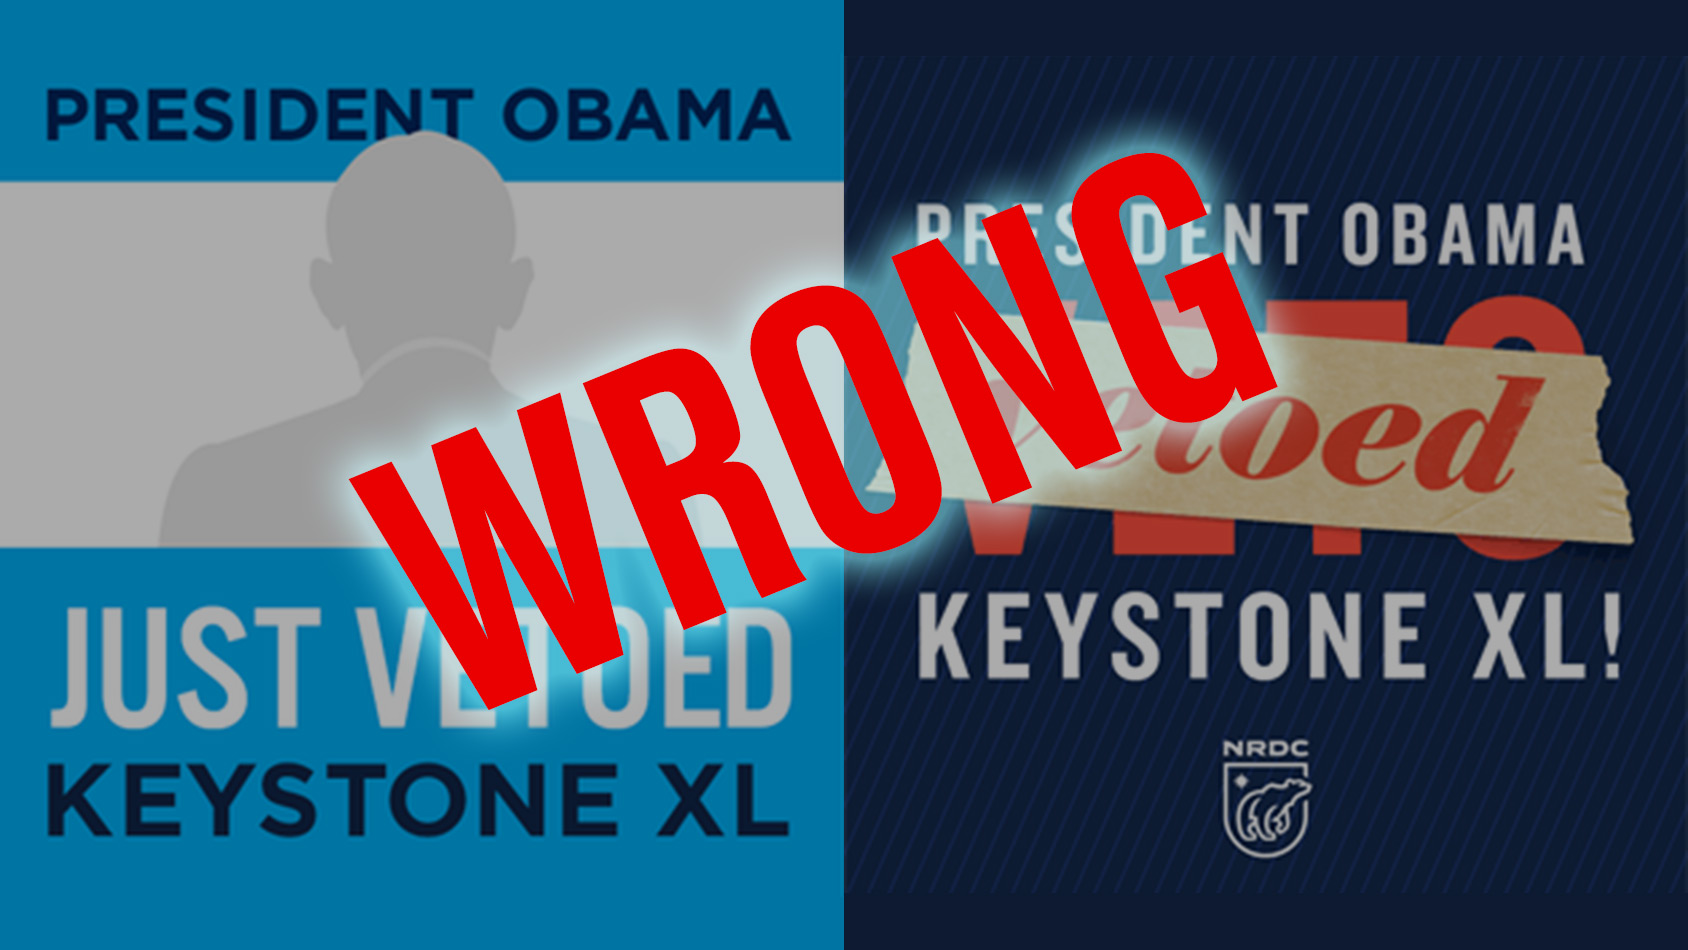 Obama vetoed Keystone? Wrong.